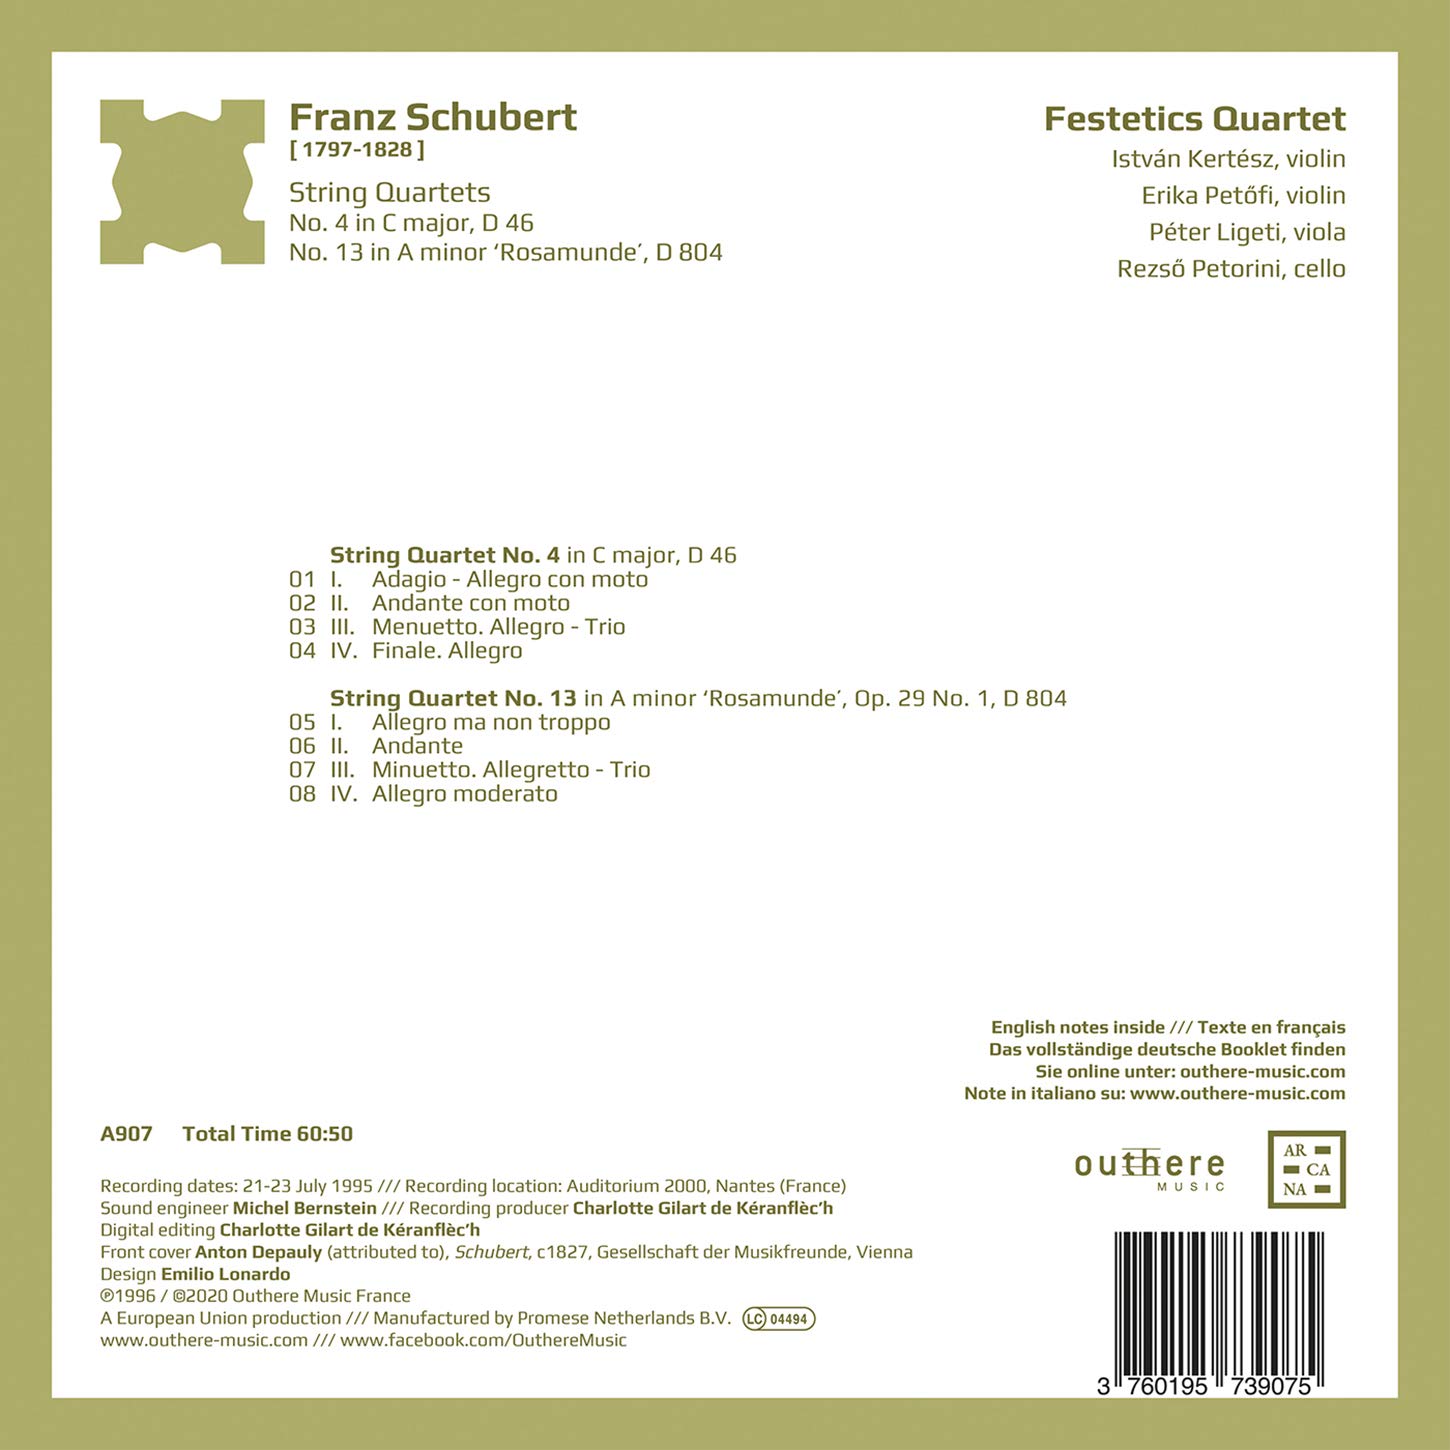 Festetics Quartet 슈베르트: 현악사중주 4번, 13번 '로자문데' (Schubert: String Quartets D46, D804 'Rosamunde') 